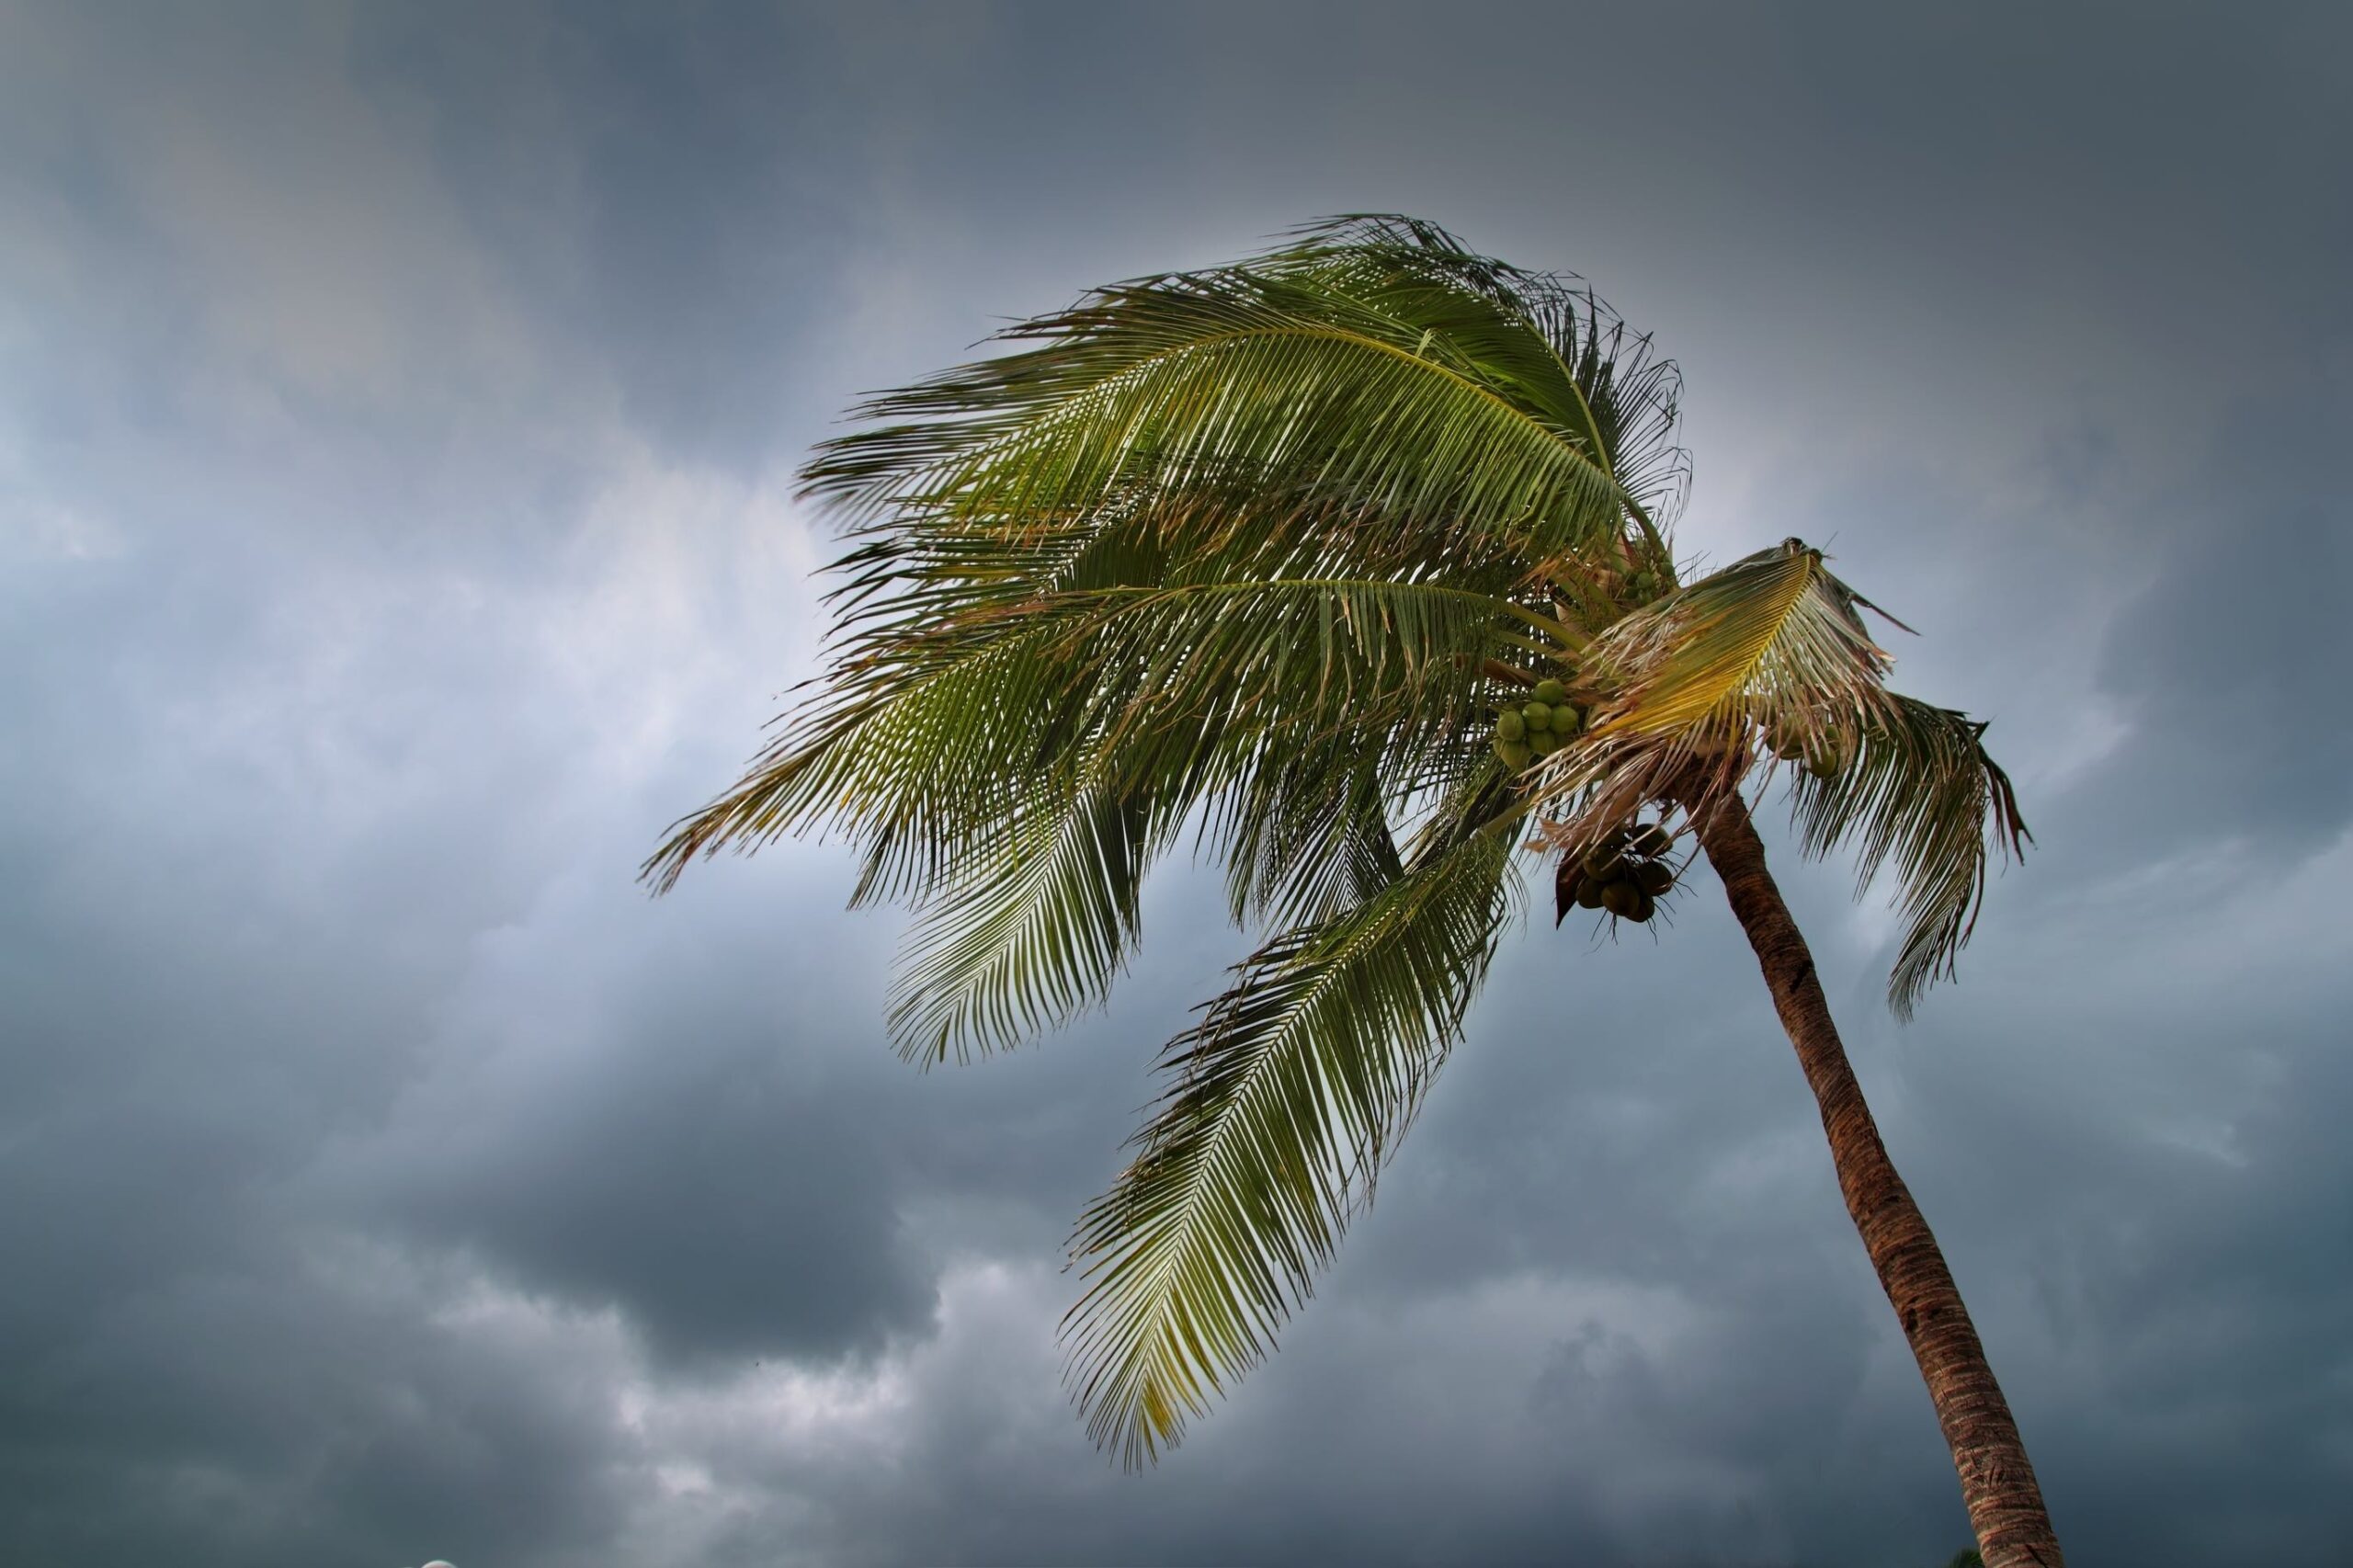 A coconut tree blowing in a heavy wind.